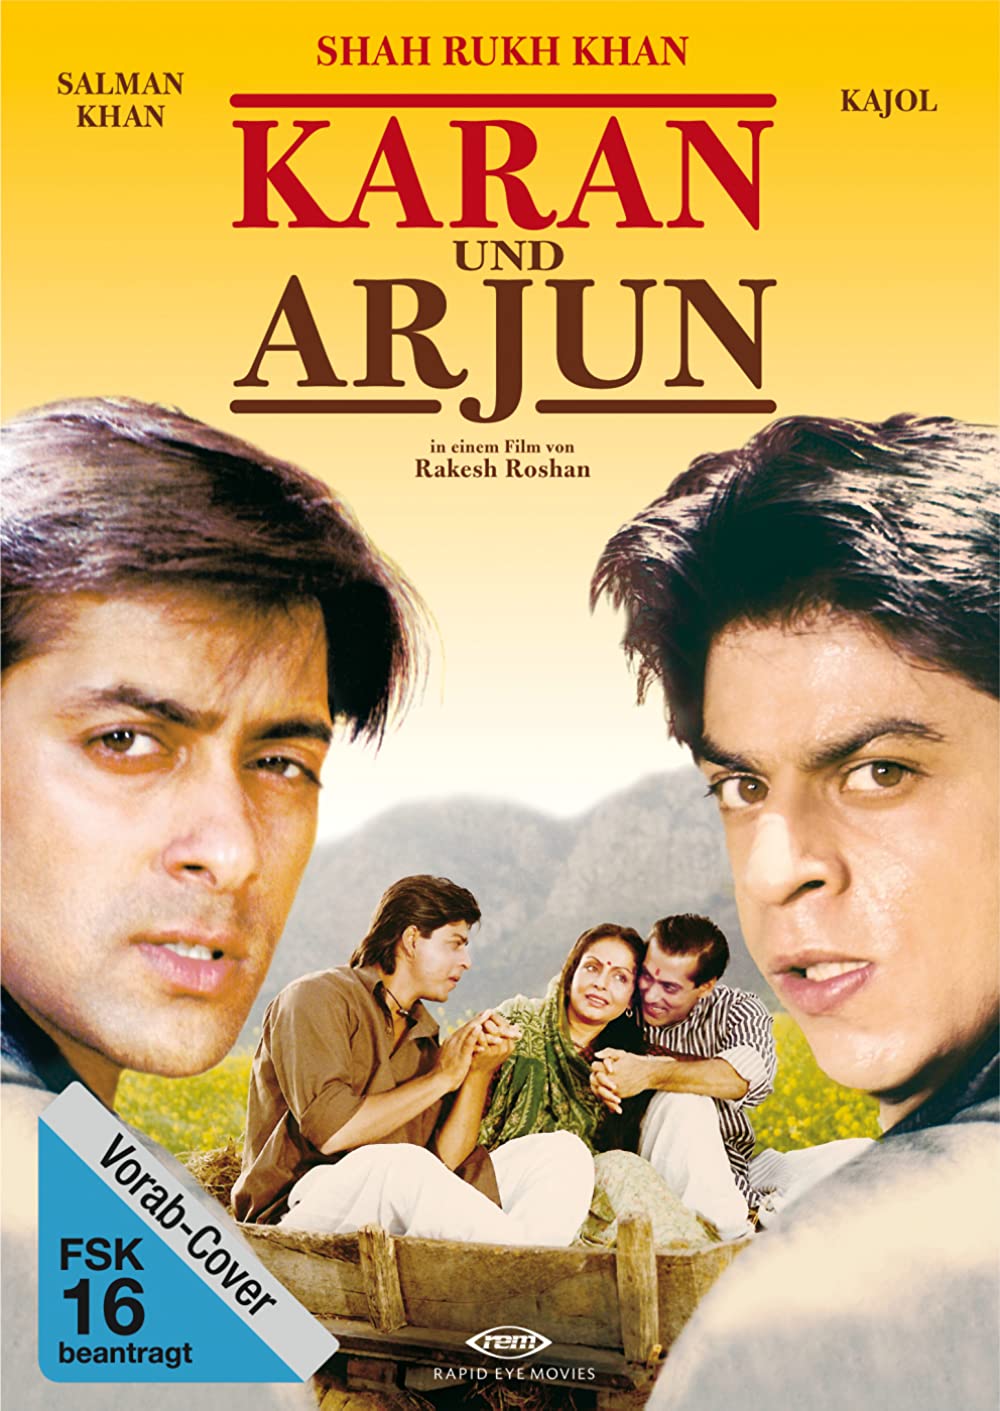 Karan-Arjun-best-movies-of-Salman-Khan - Pop Culture, Entertainment, Humor,  Travel & More